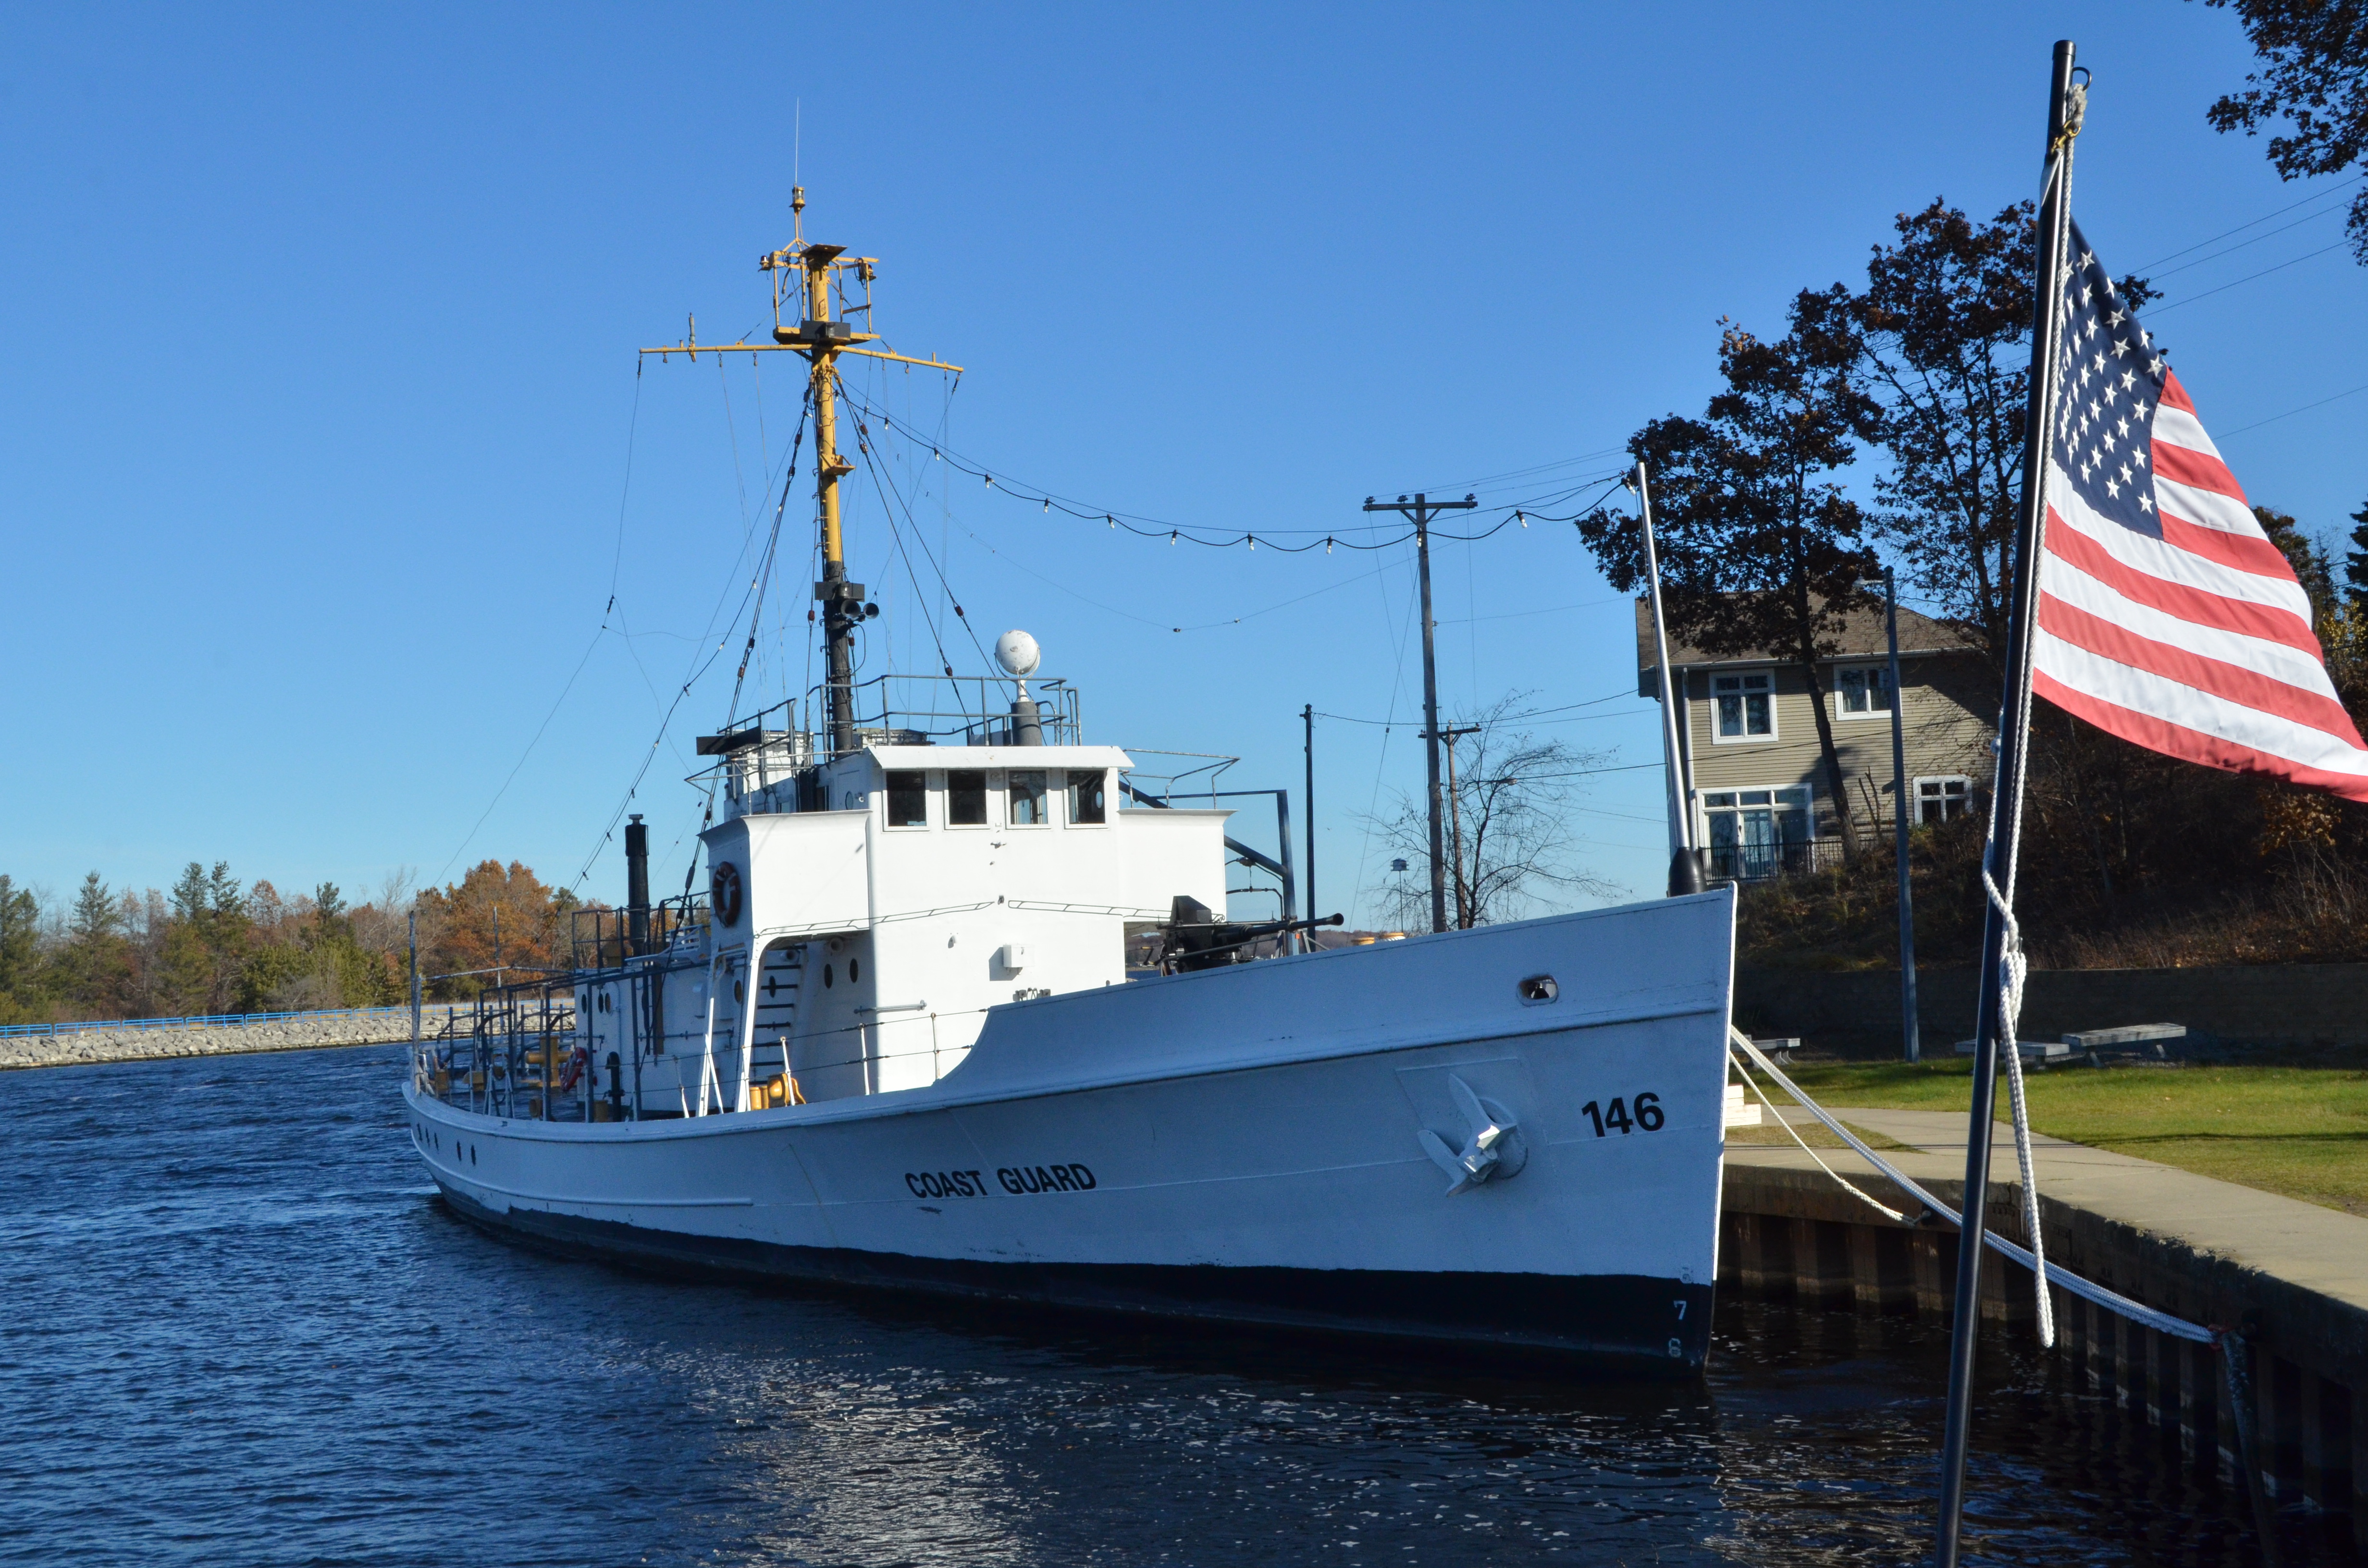 USS Silversides Submarine Museum McLane CG Cutter